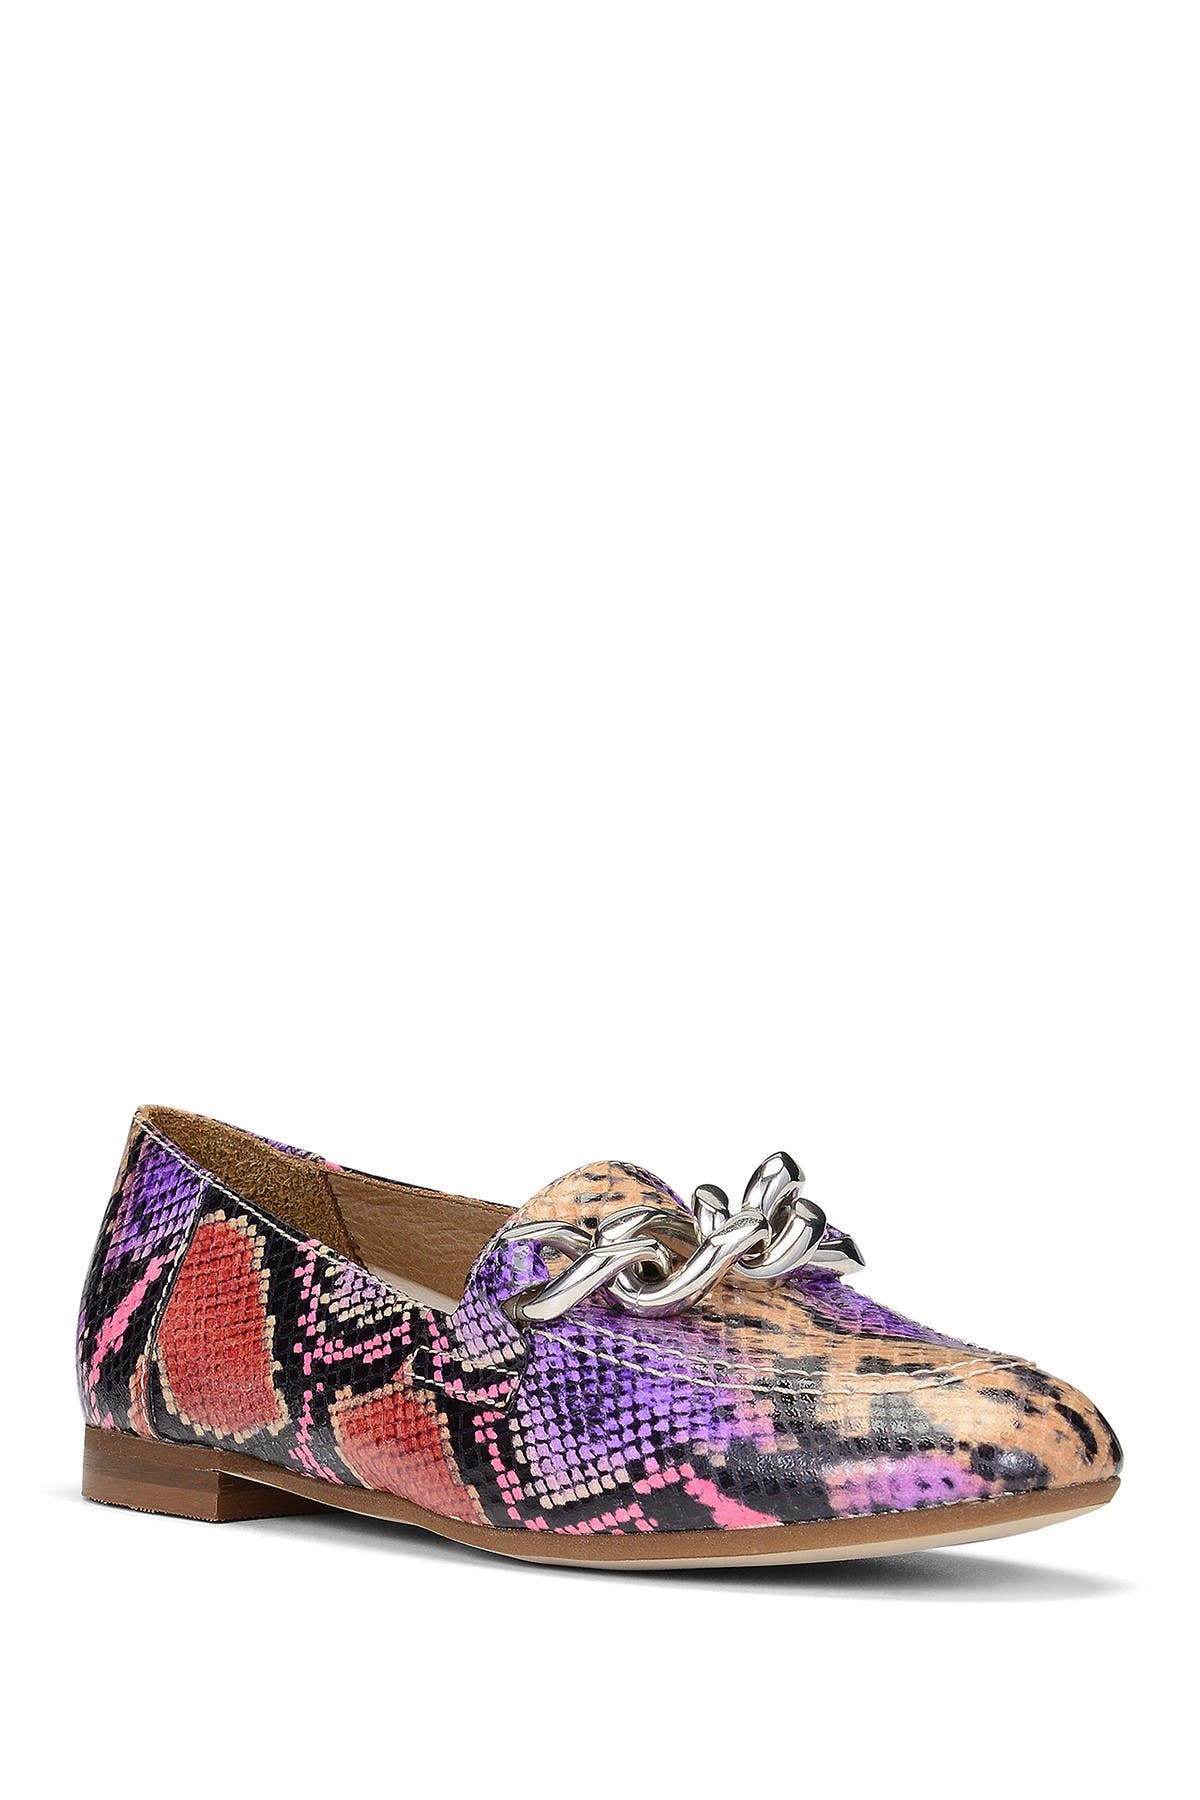 Donald Pliner Nolin Snake Print Loafer In Light/pastel Purple